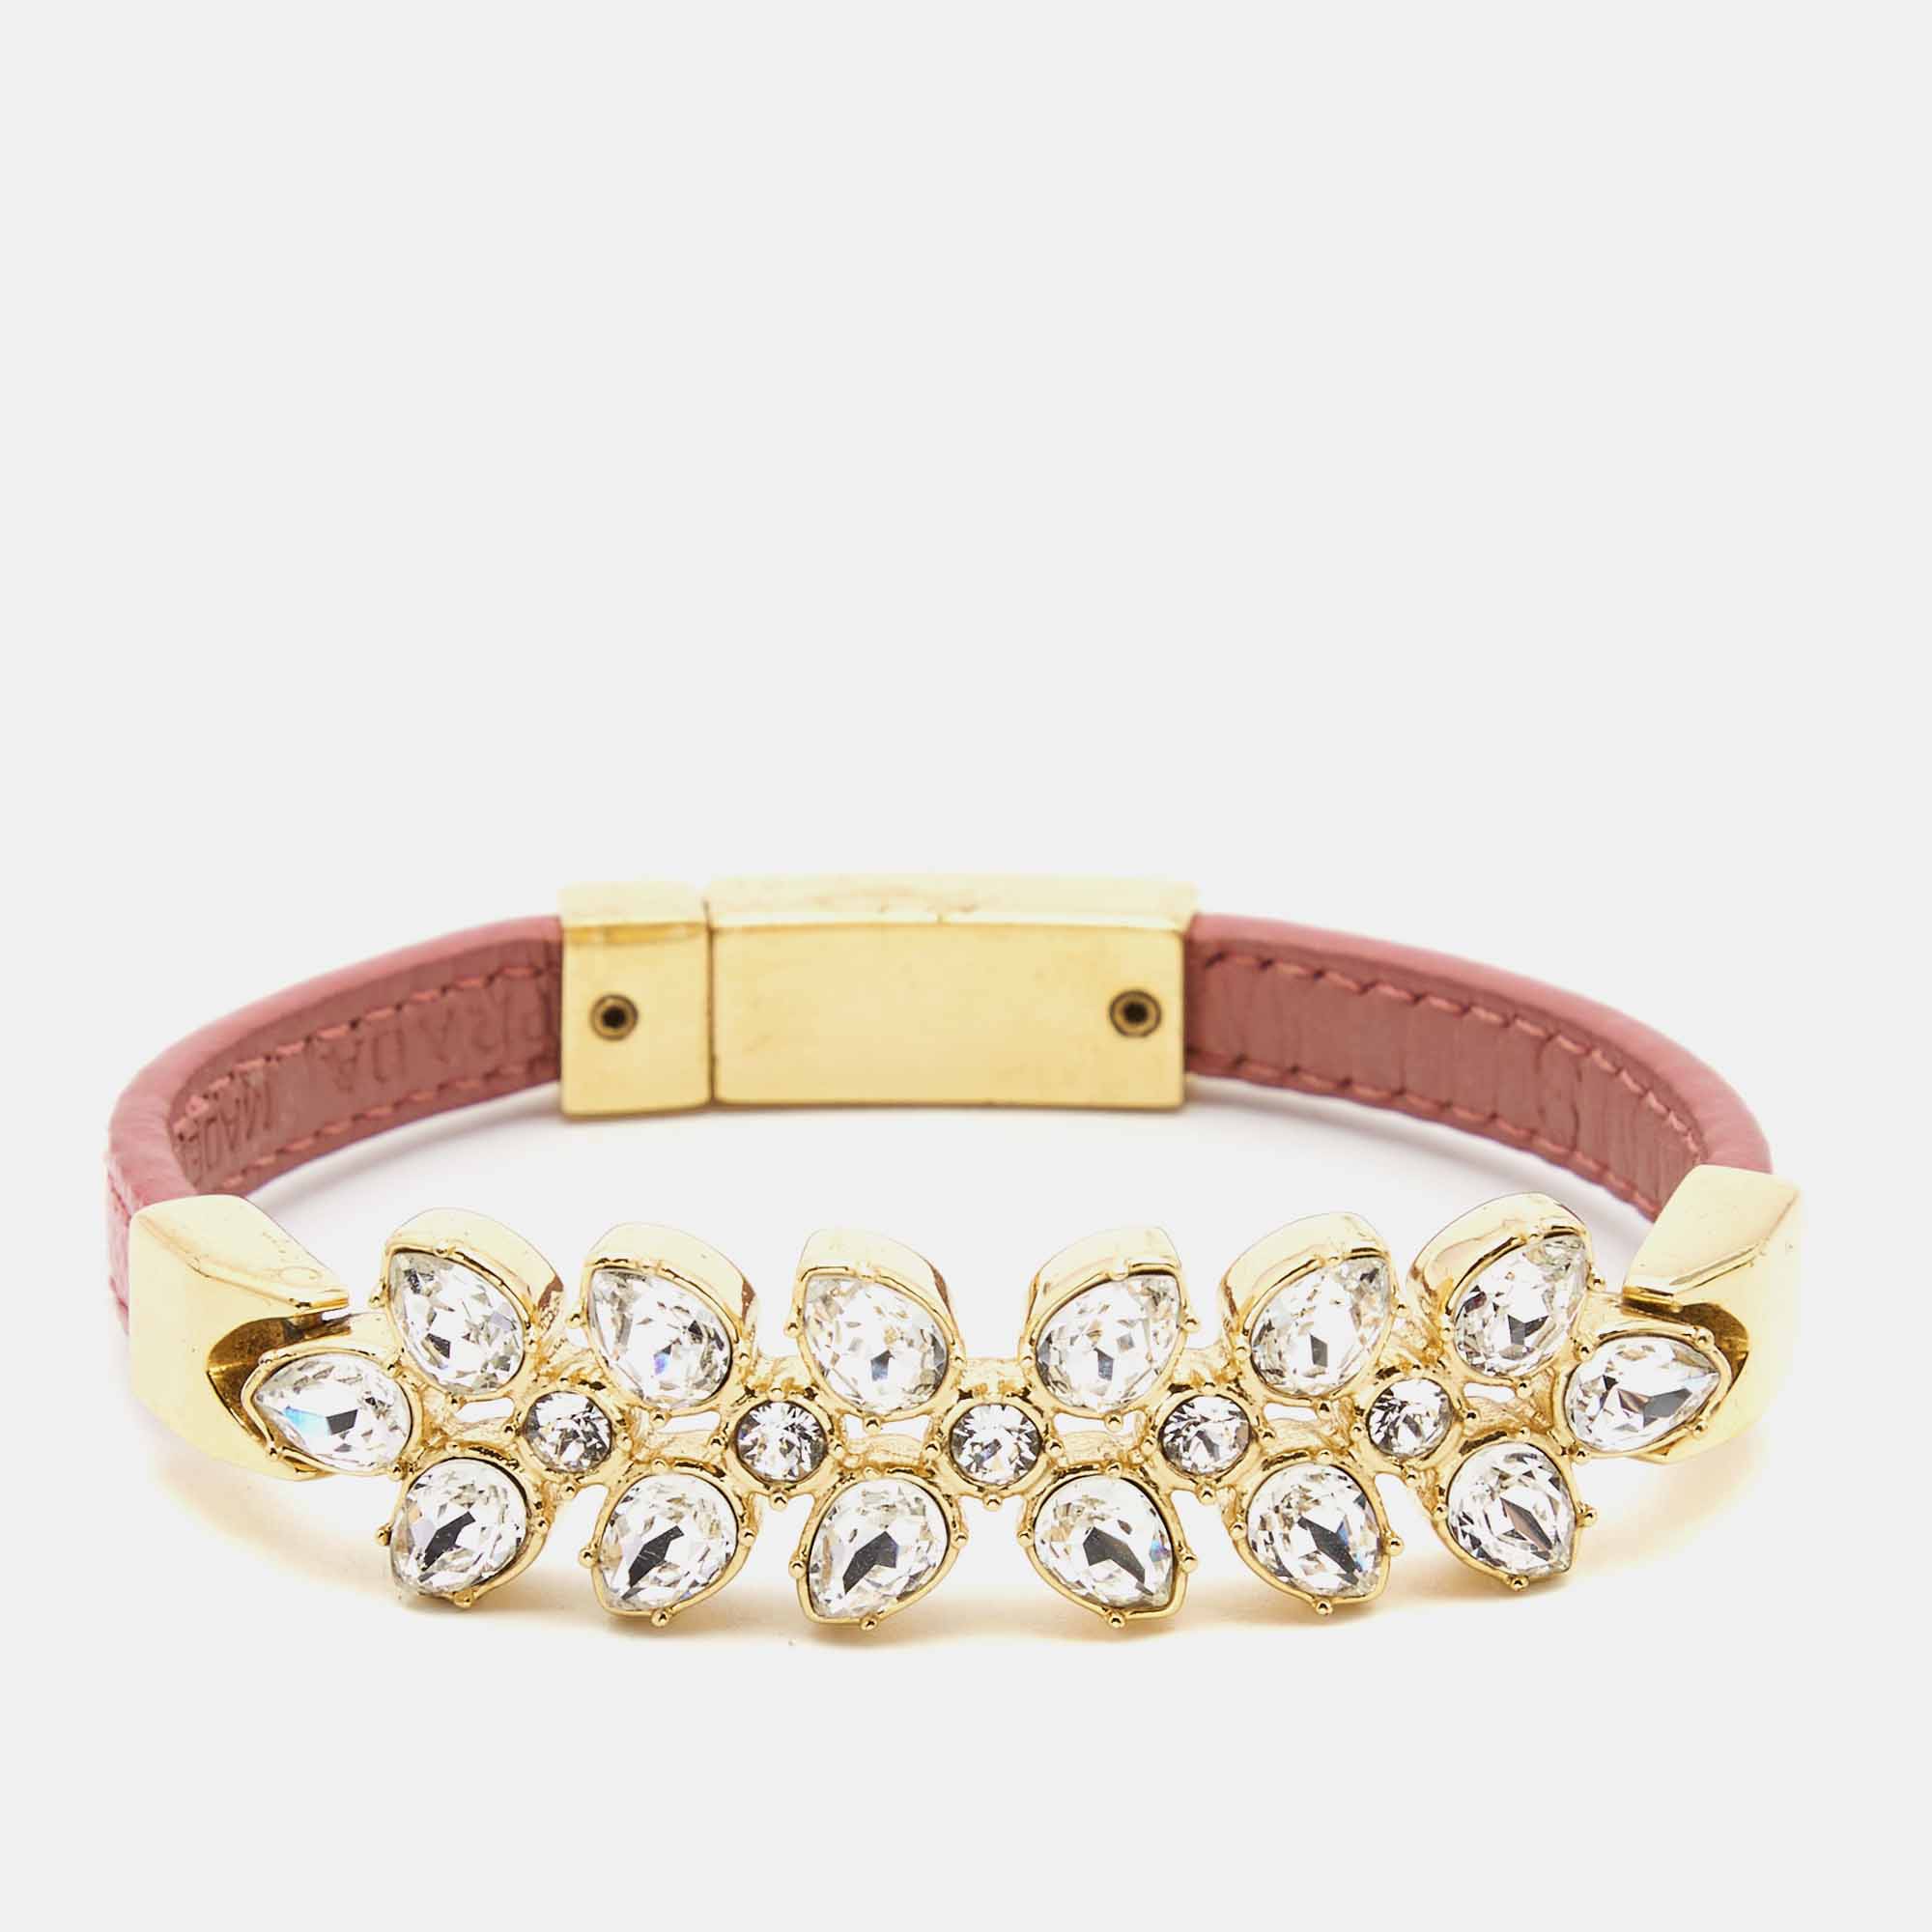 Prada chic crystals  leather gold tone bracelet s